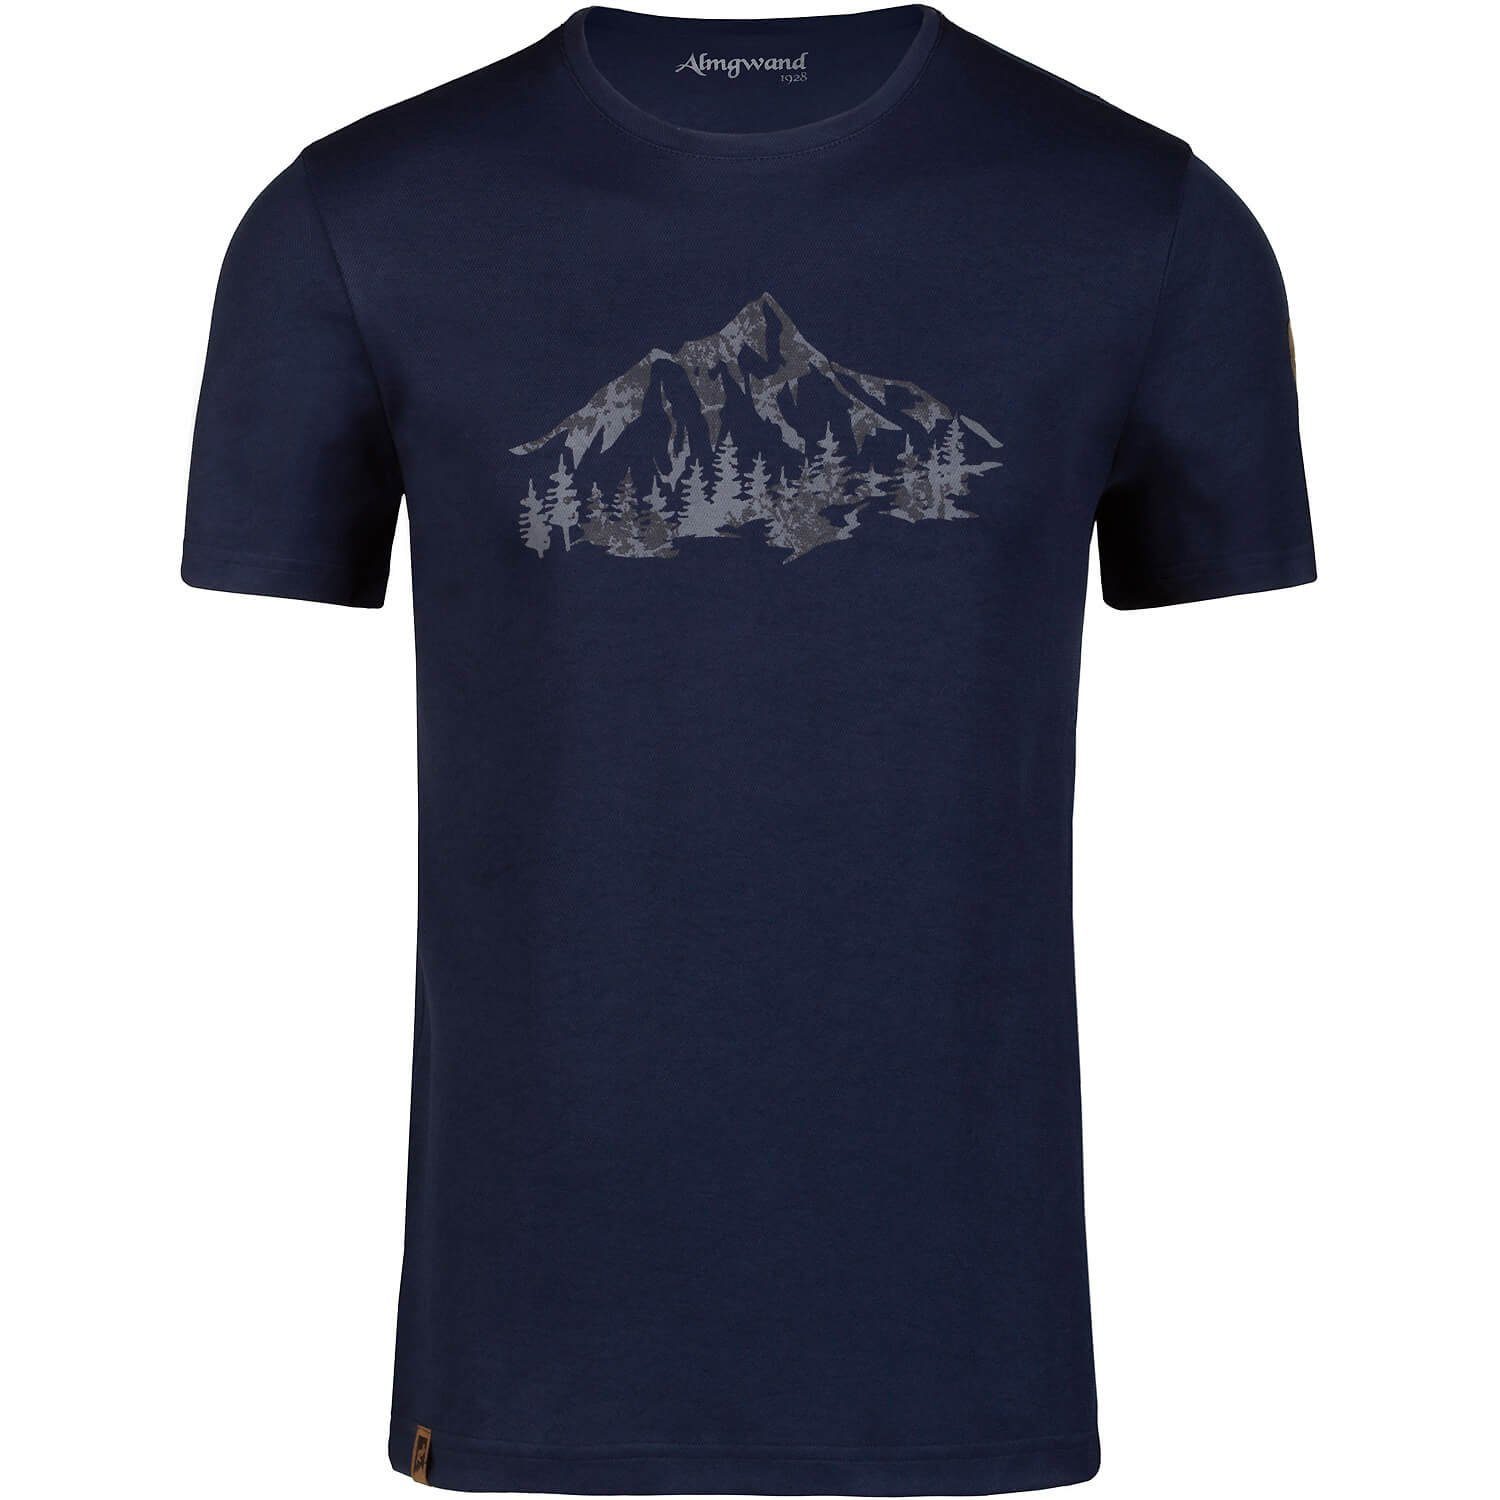 Almgwand T-Shirt T-Shirt Aichleralm Marine